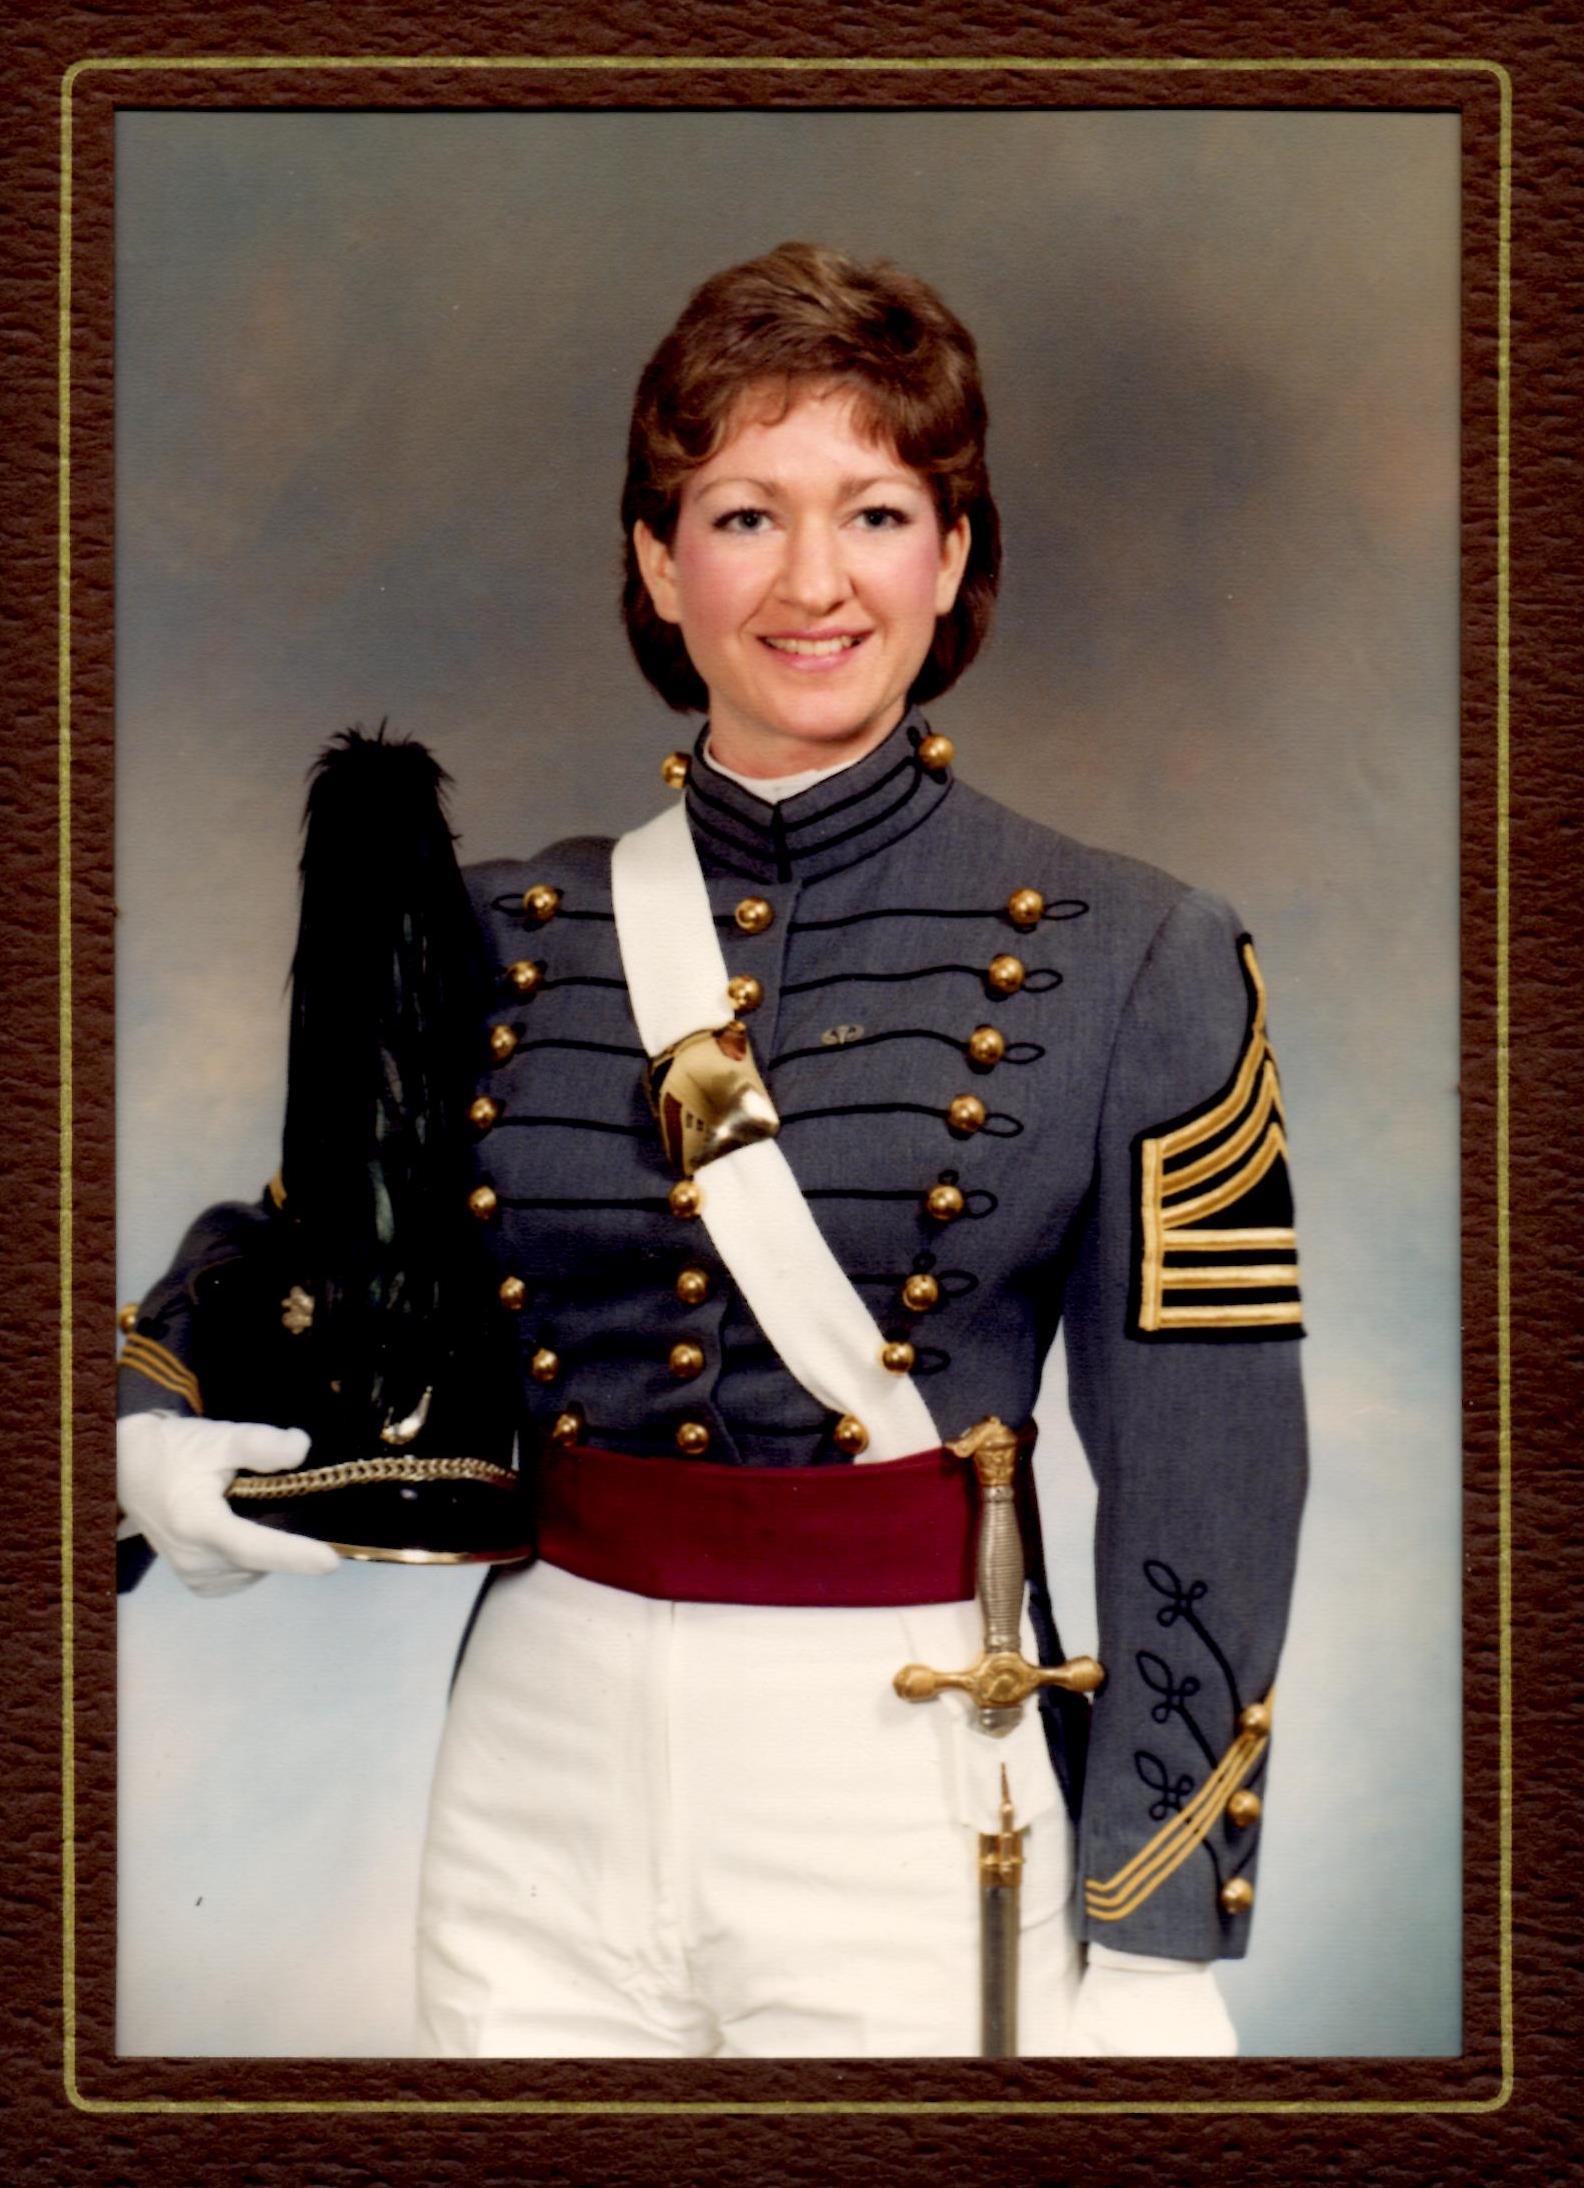 Author Laurel McHargue as a cadet at West Point 1979-1983.